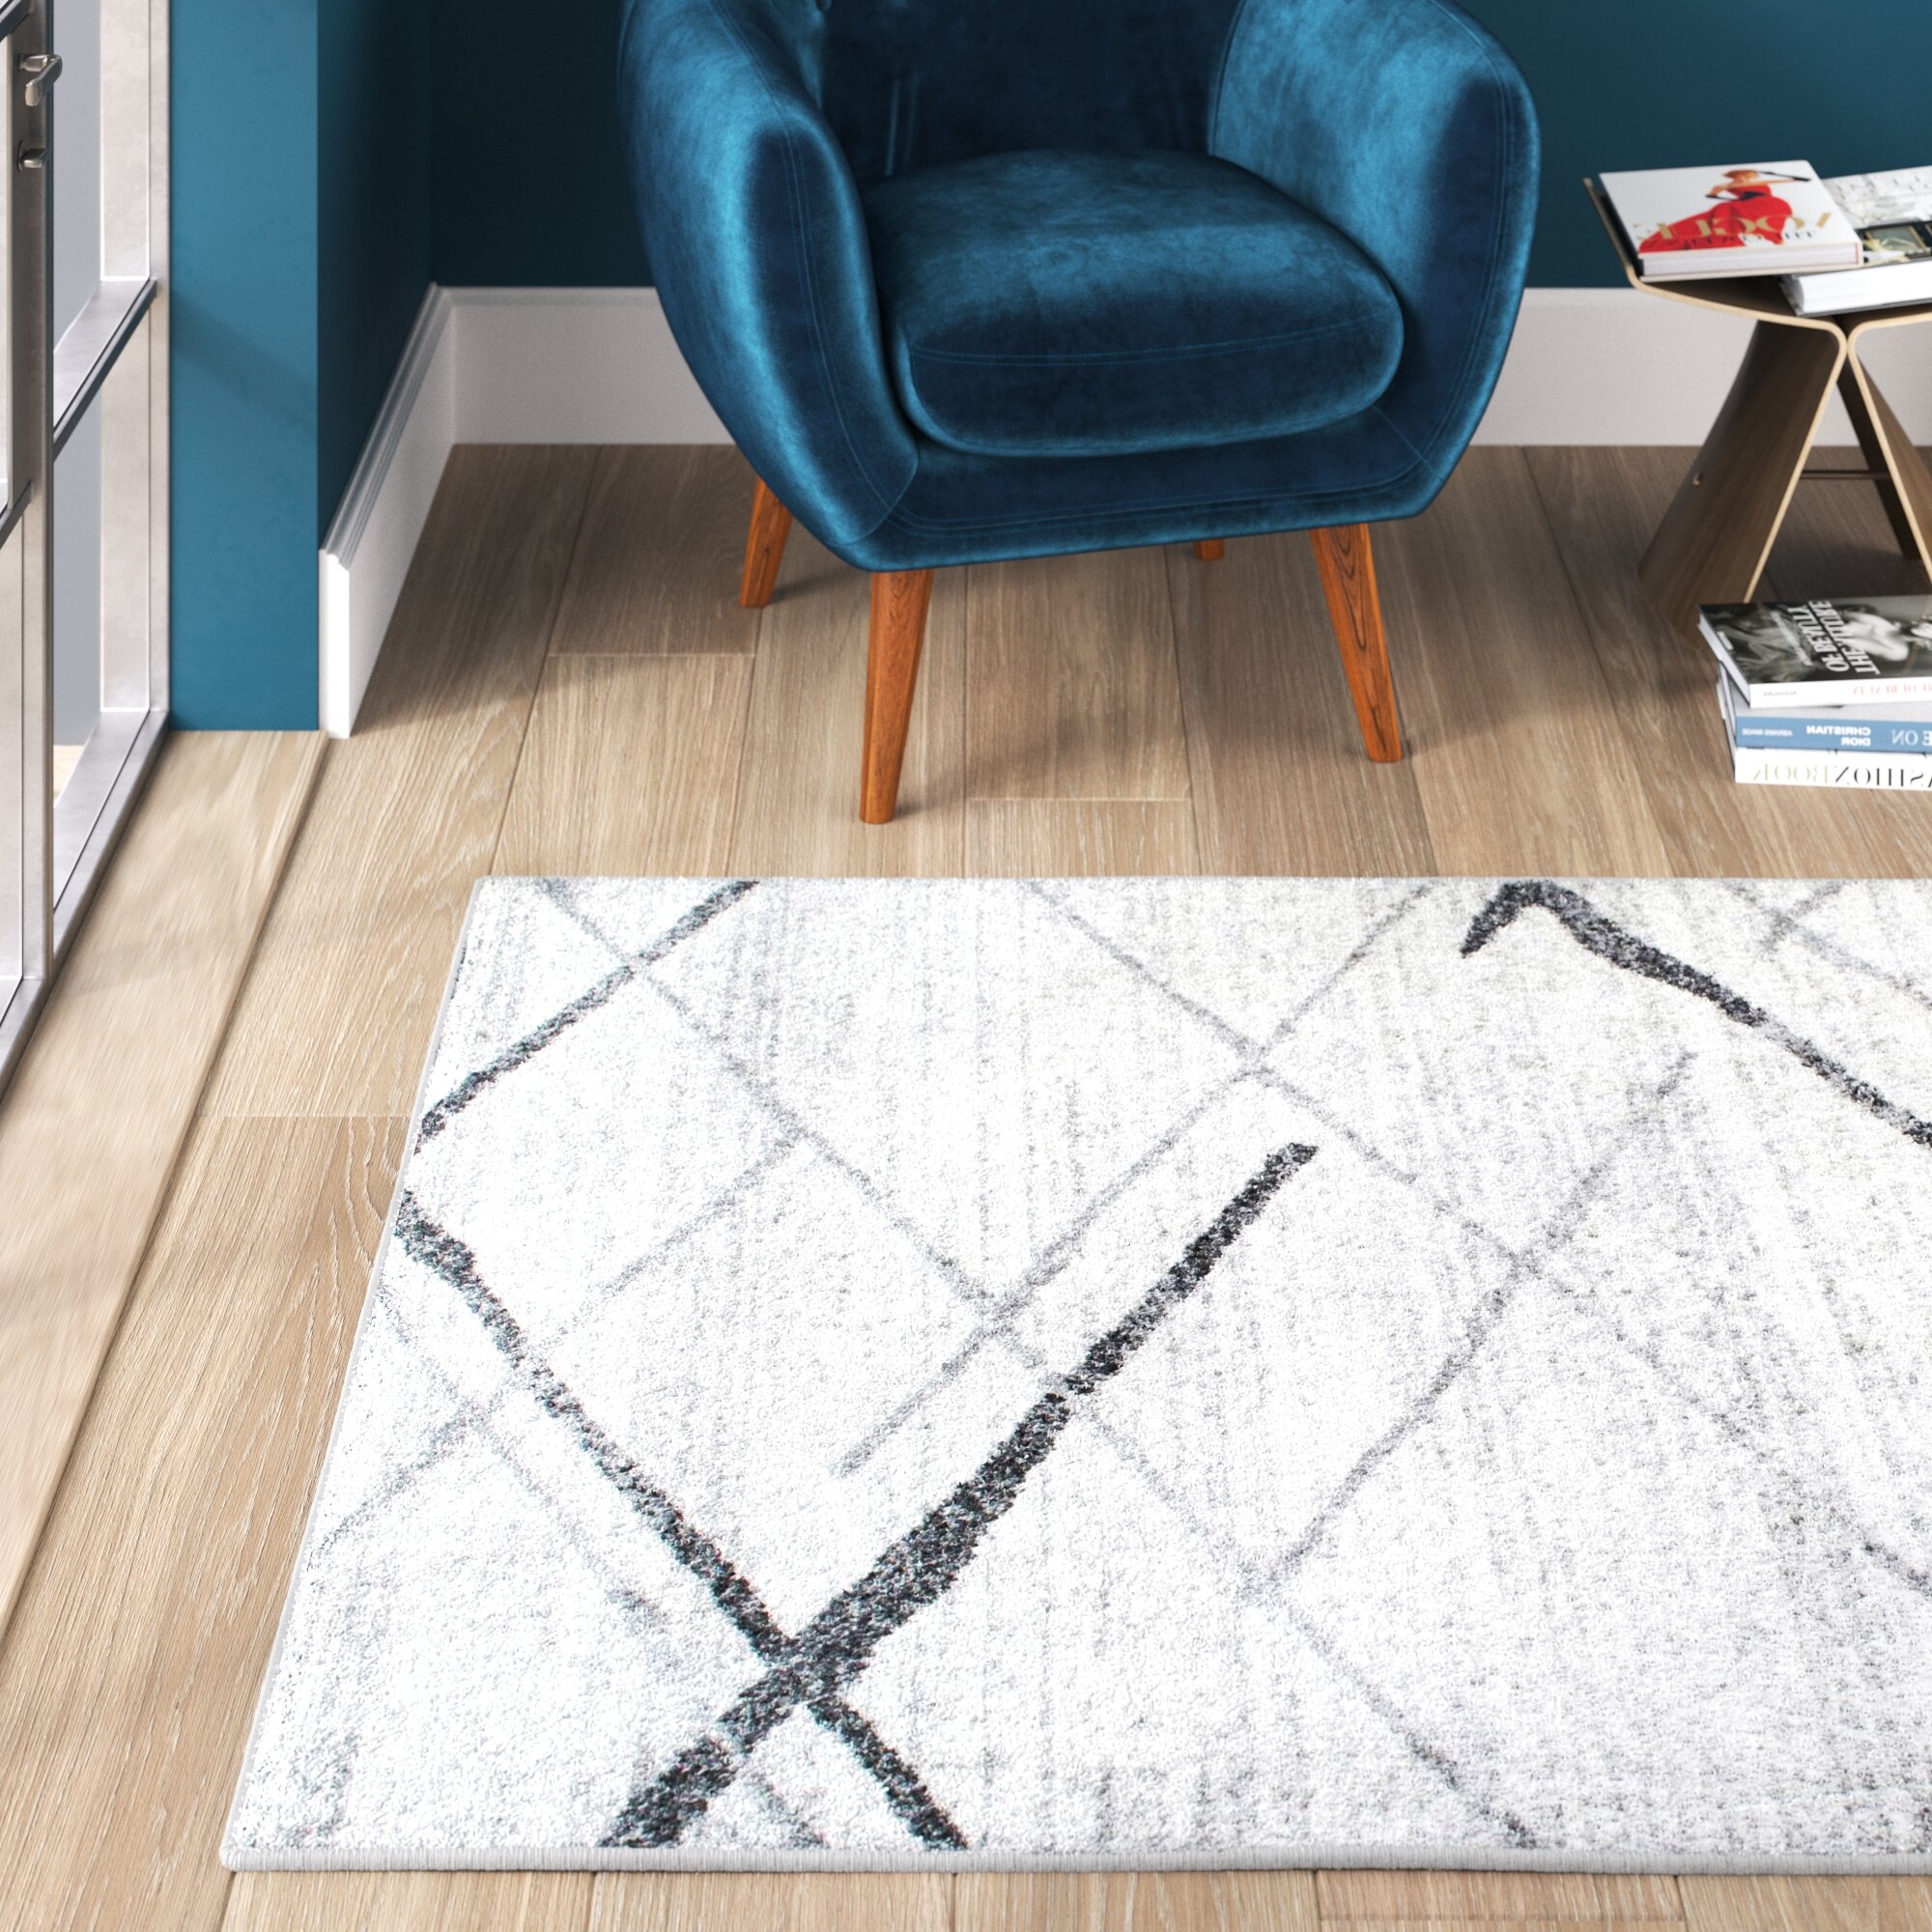 Throw Rug Modern Contemporary Ivory Gray Shag Living Room Area Floor Mat 8x10 